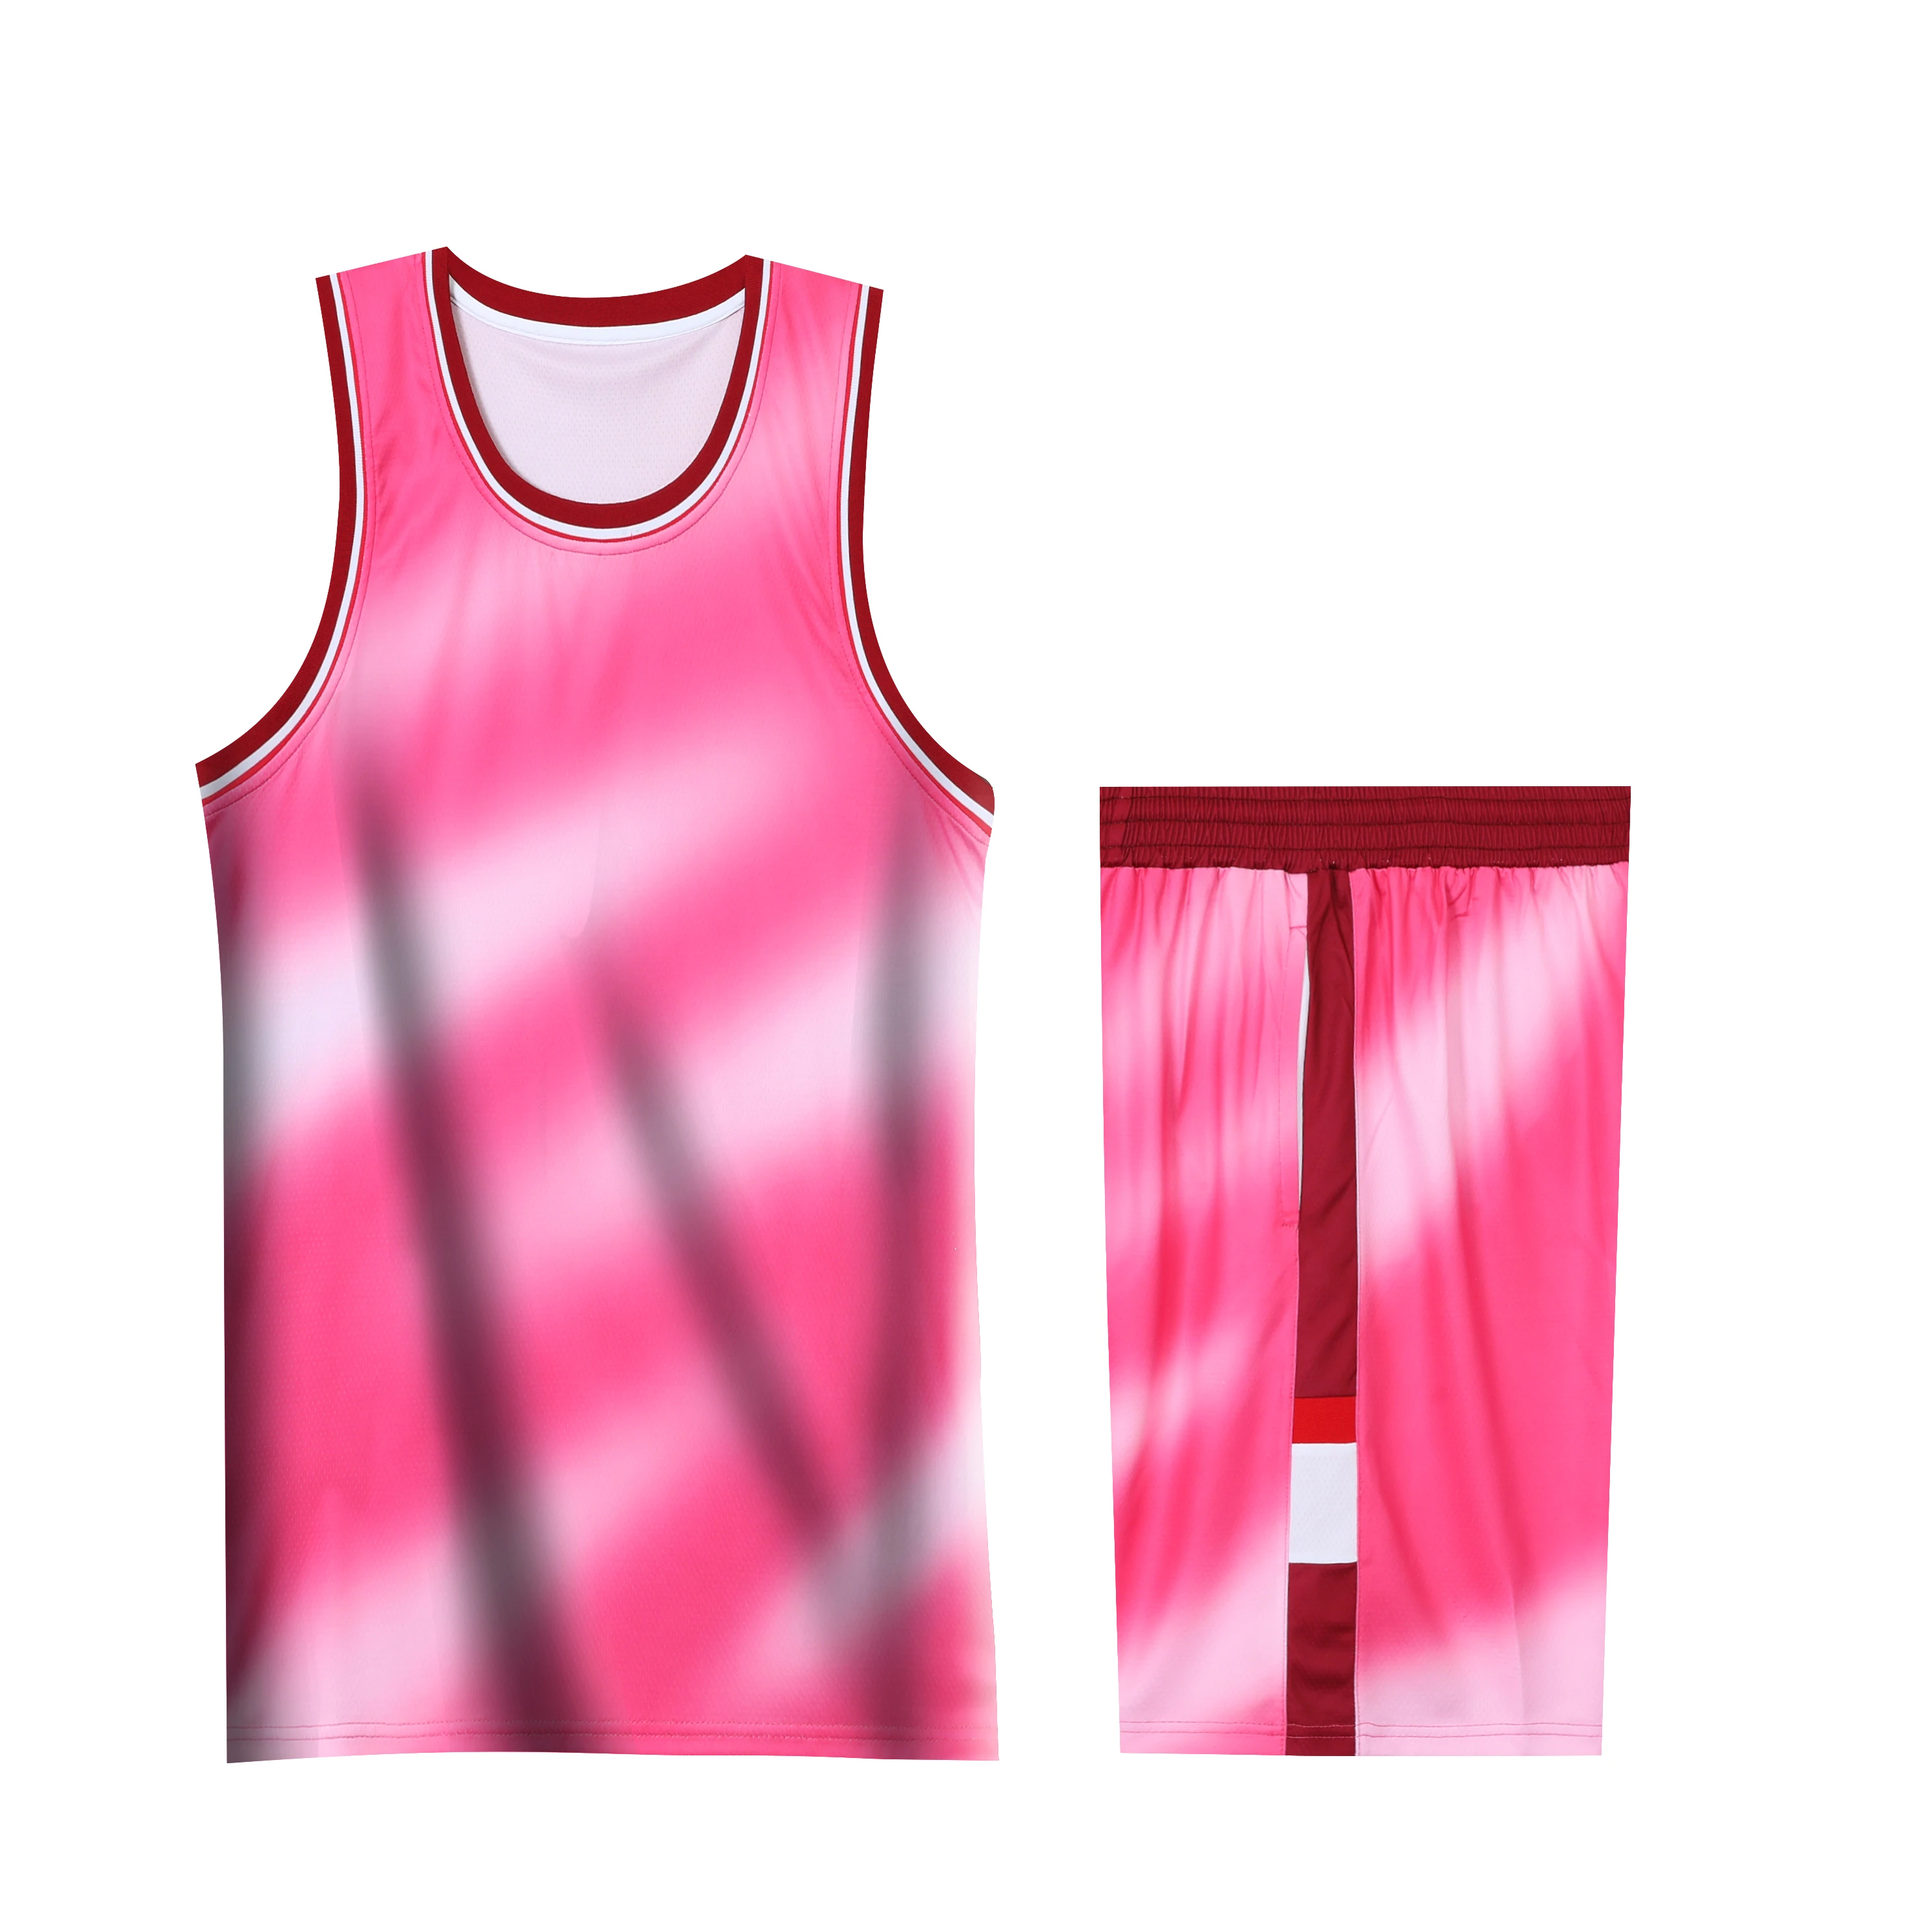 Bulk-buy Healong Sublimation Printing Basketball Jersey Cheap Custom  Basketball Uniform Pink price comparison